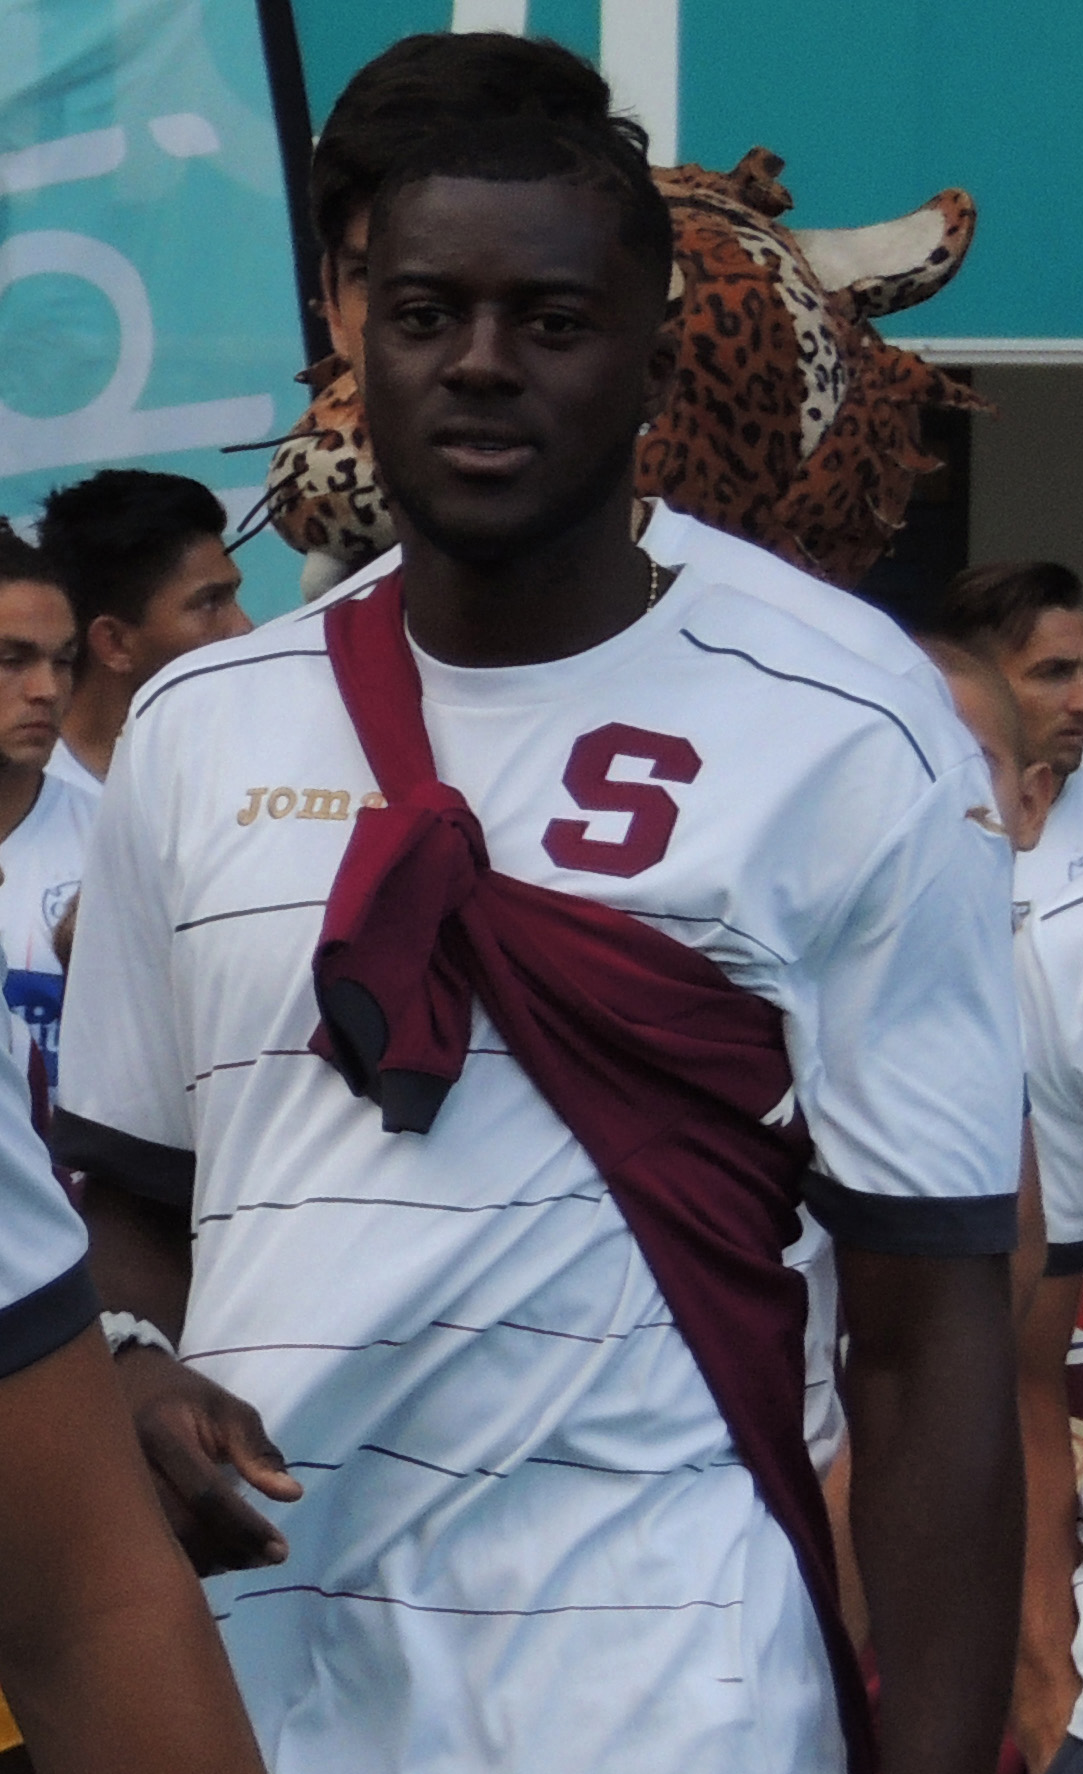 Jordan (Costa footballer) - Wikipedia